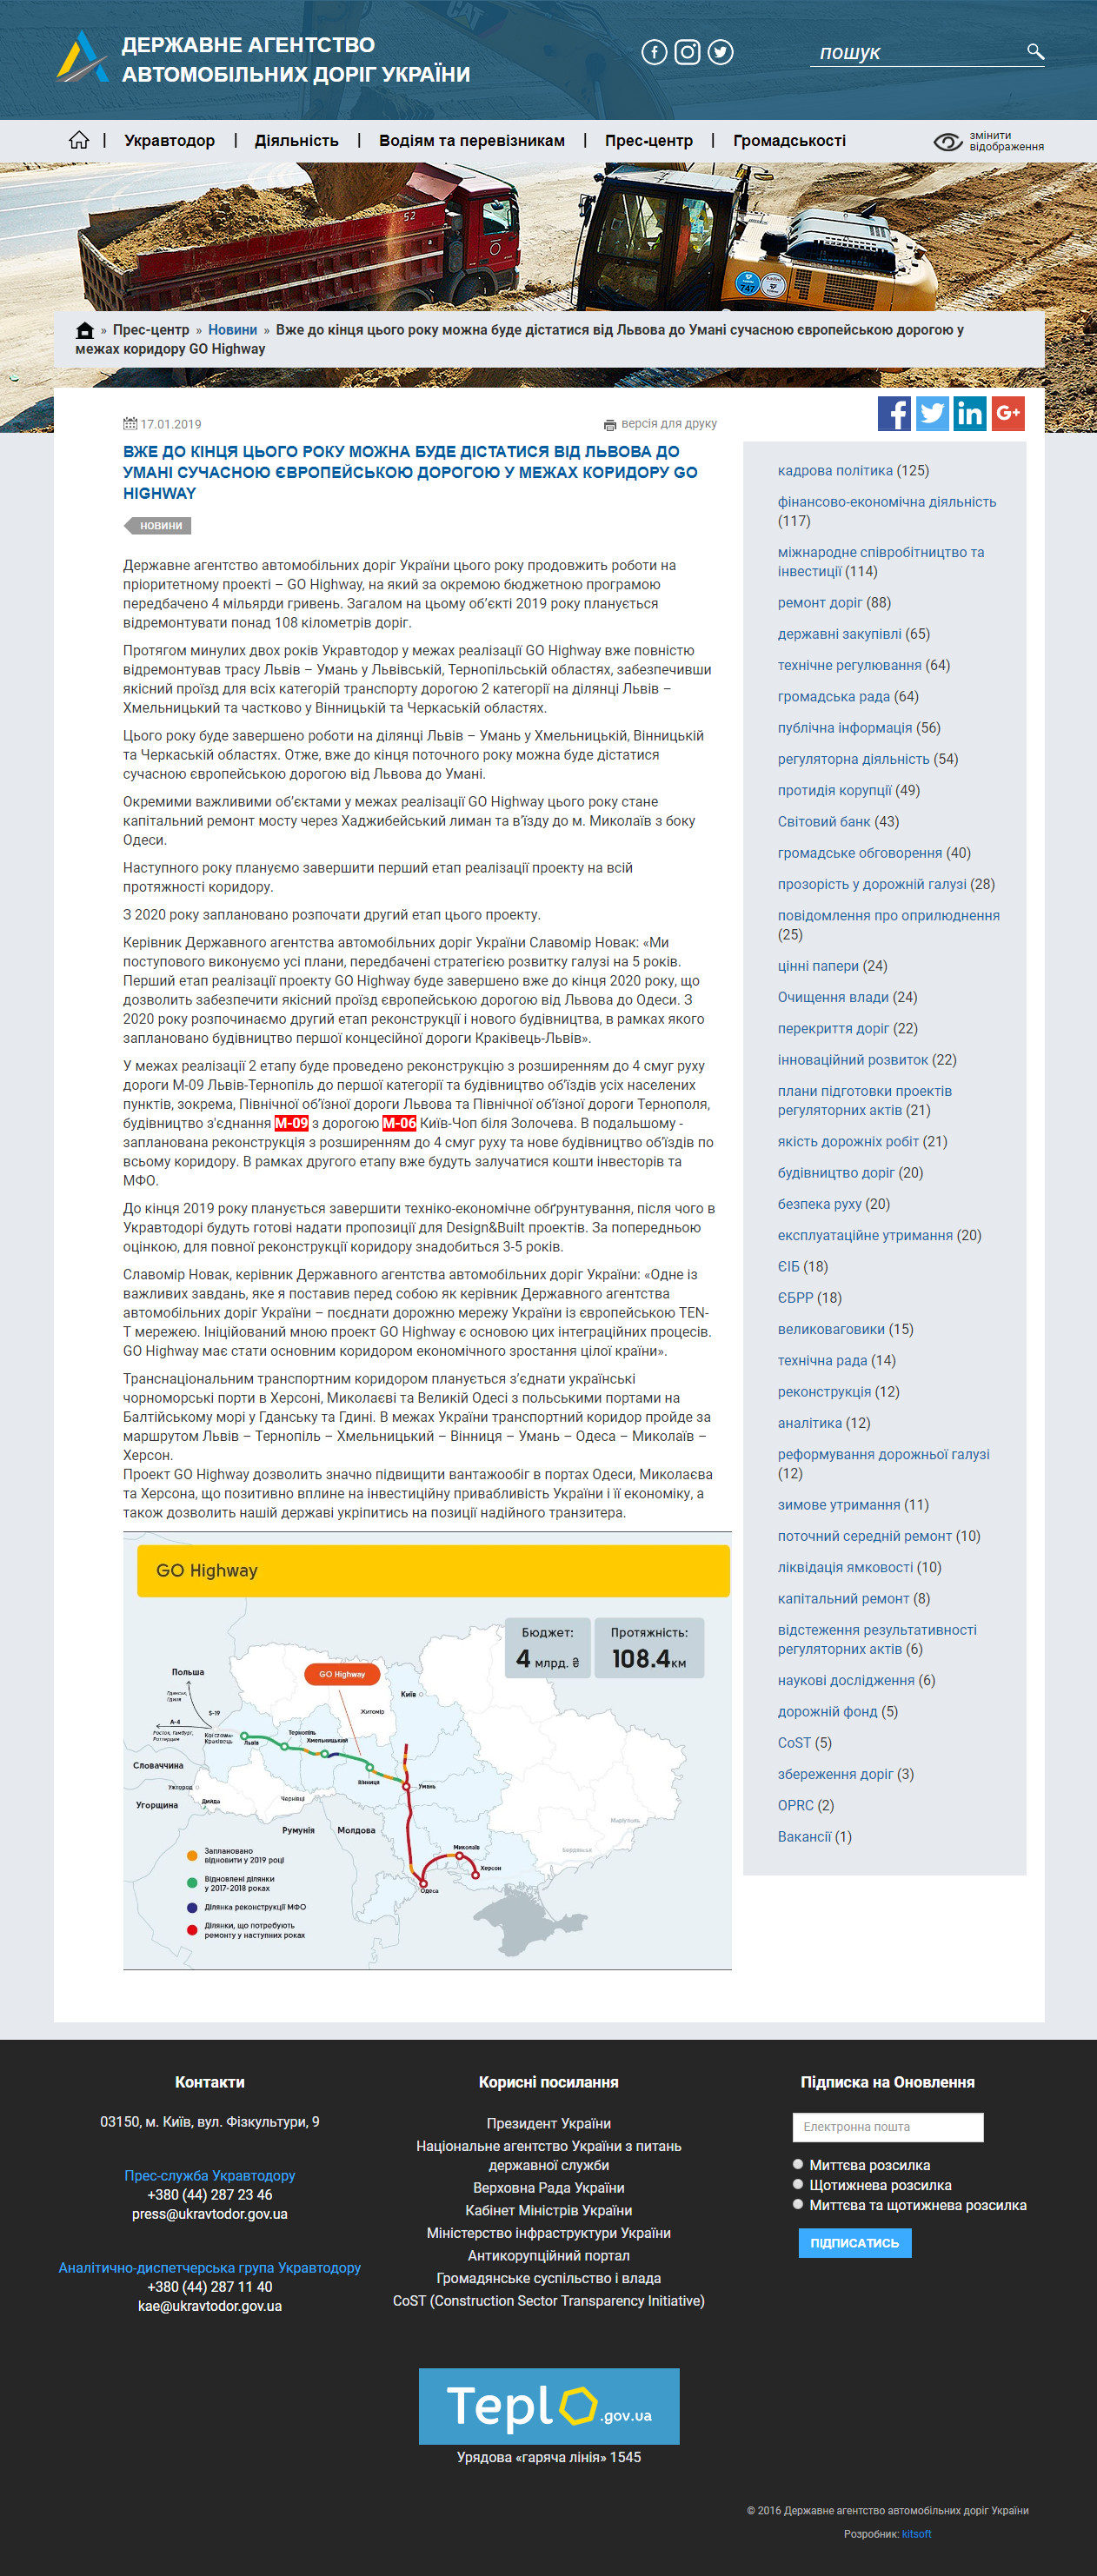 http://ukravtodor.gov.ua/press/news/vzhe_do_kintsia_tsoho_roku_mozhna_bude_distatysia_vid_lvova_do_umani_suchasnoiu_yevropeiskoiu_dorohoiu_u_mezhakh_korydoru_go_highway.html